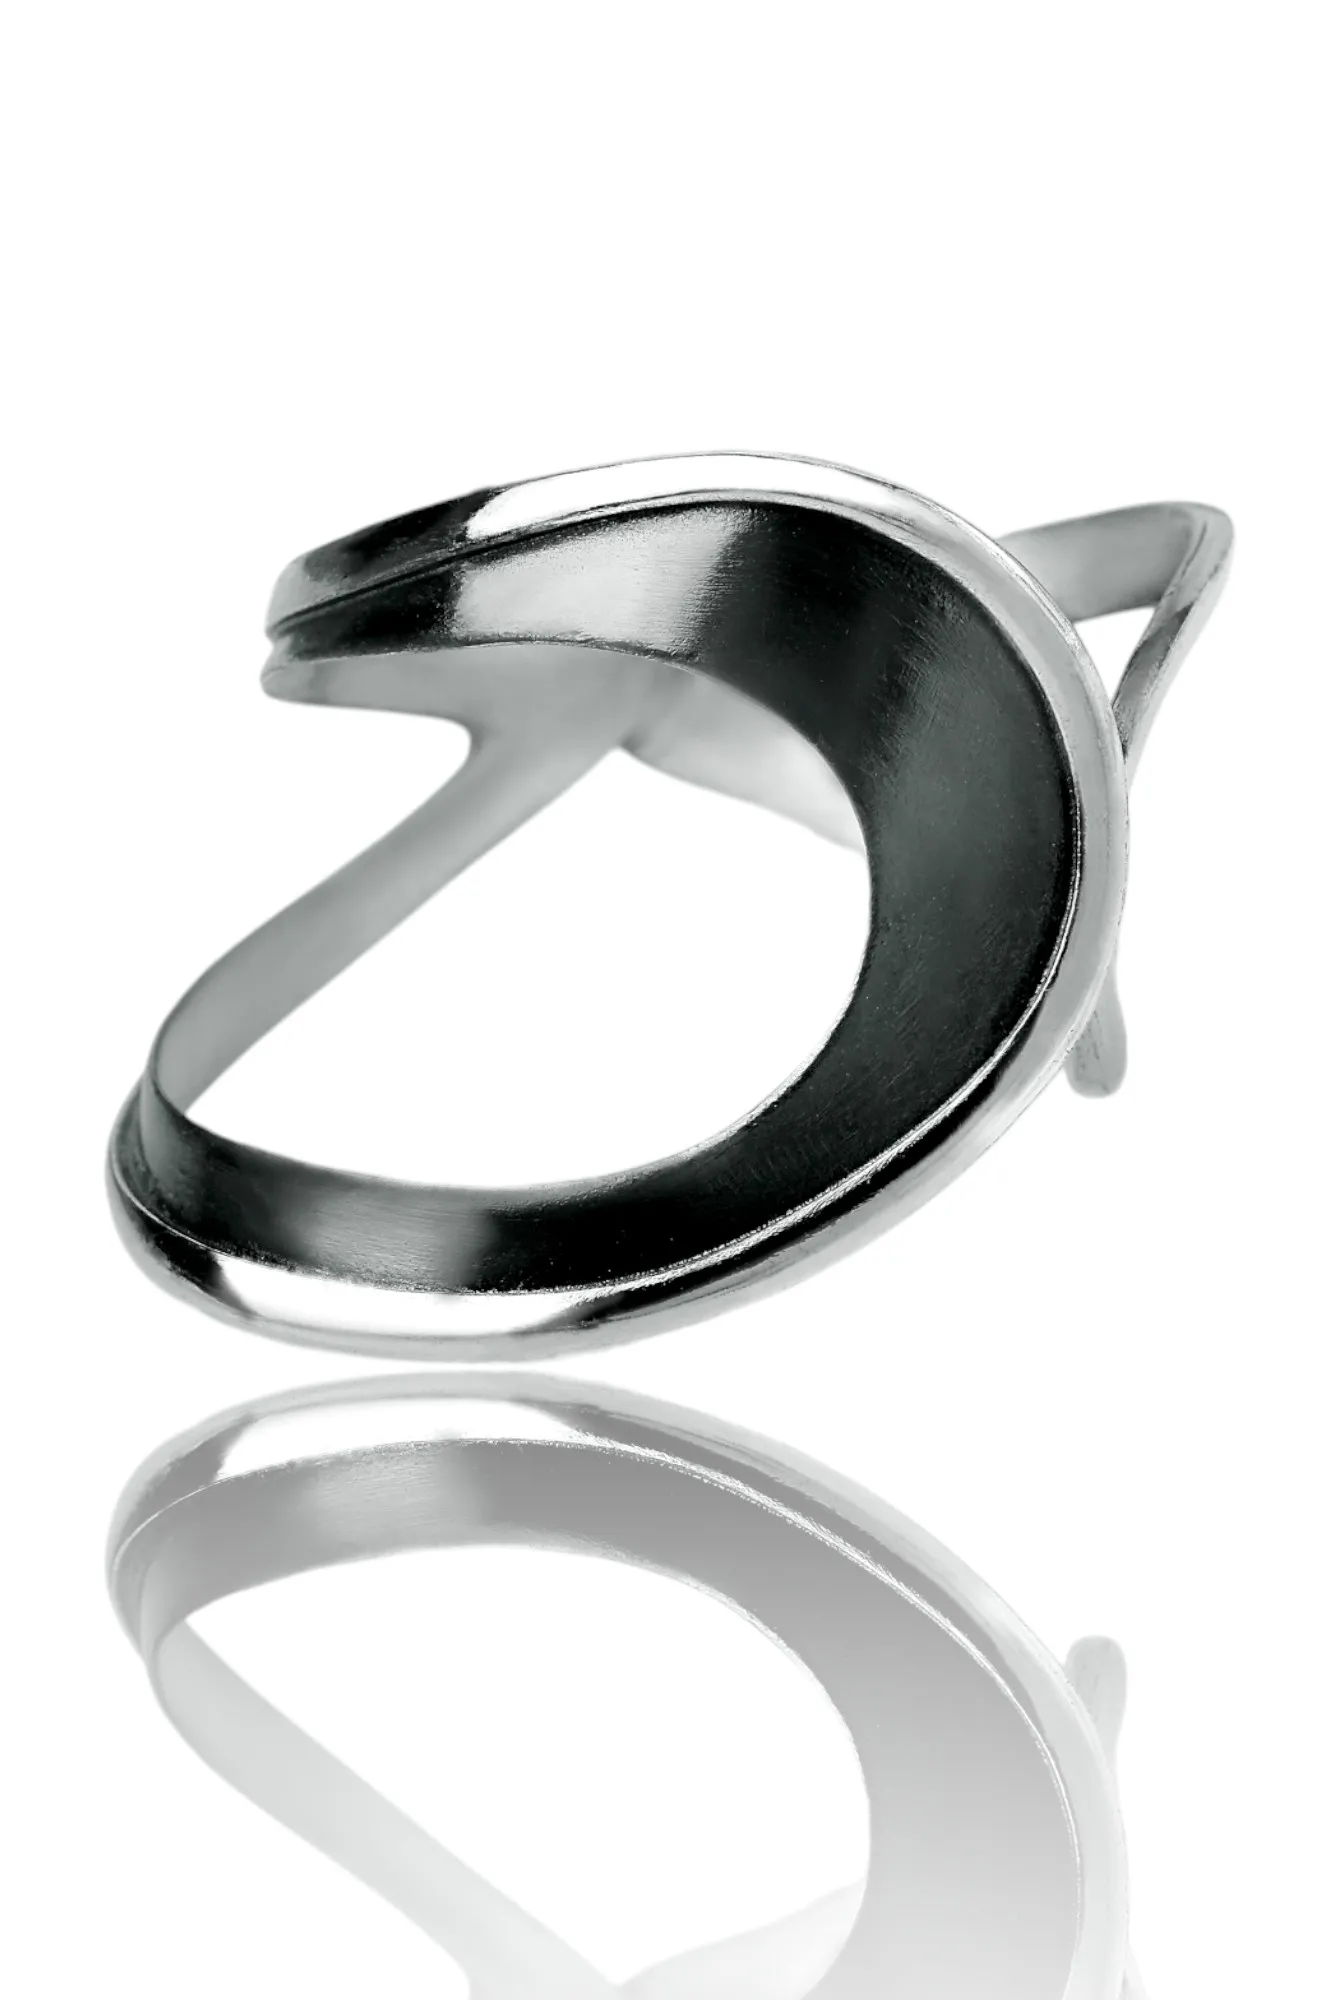 Paisley minimal oxidized adjustable silver ring